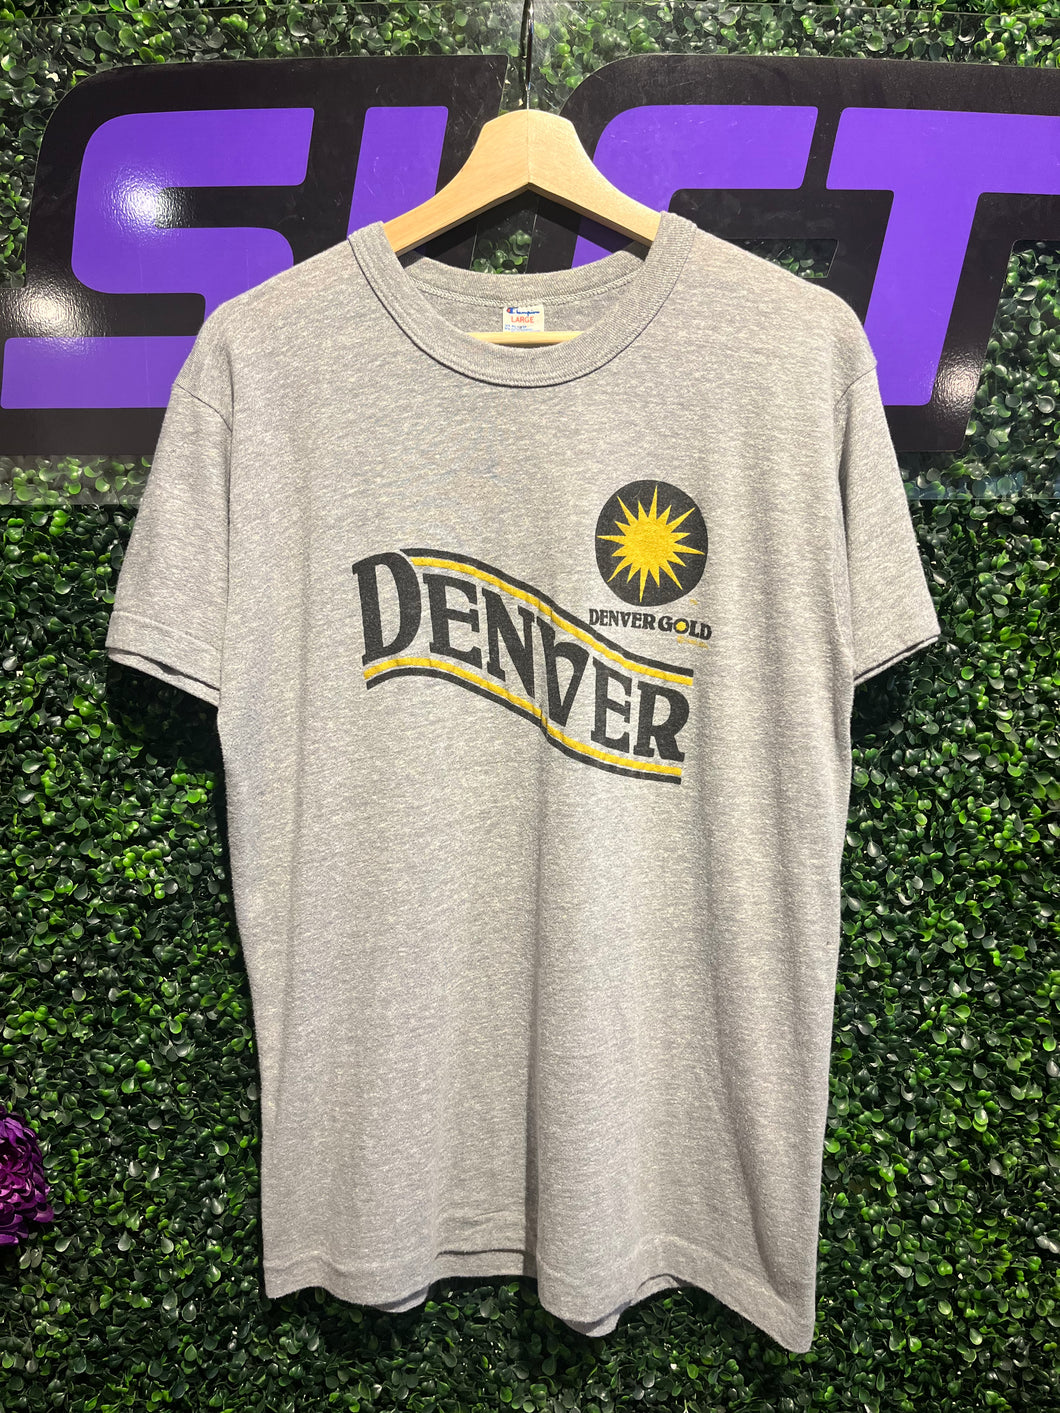 1980’s Denver Gold USFL Football T-Shirt. Size M/L